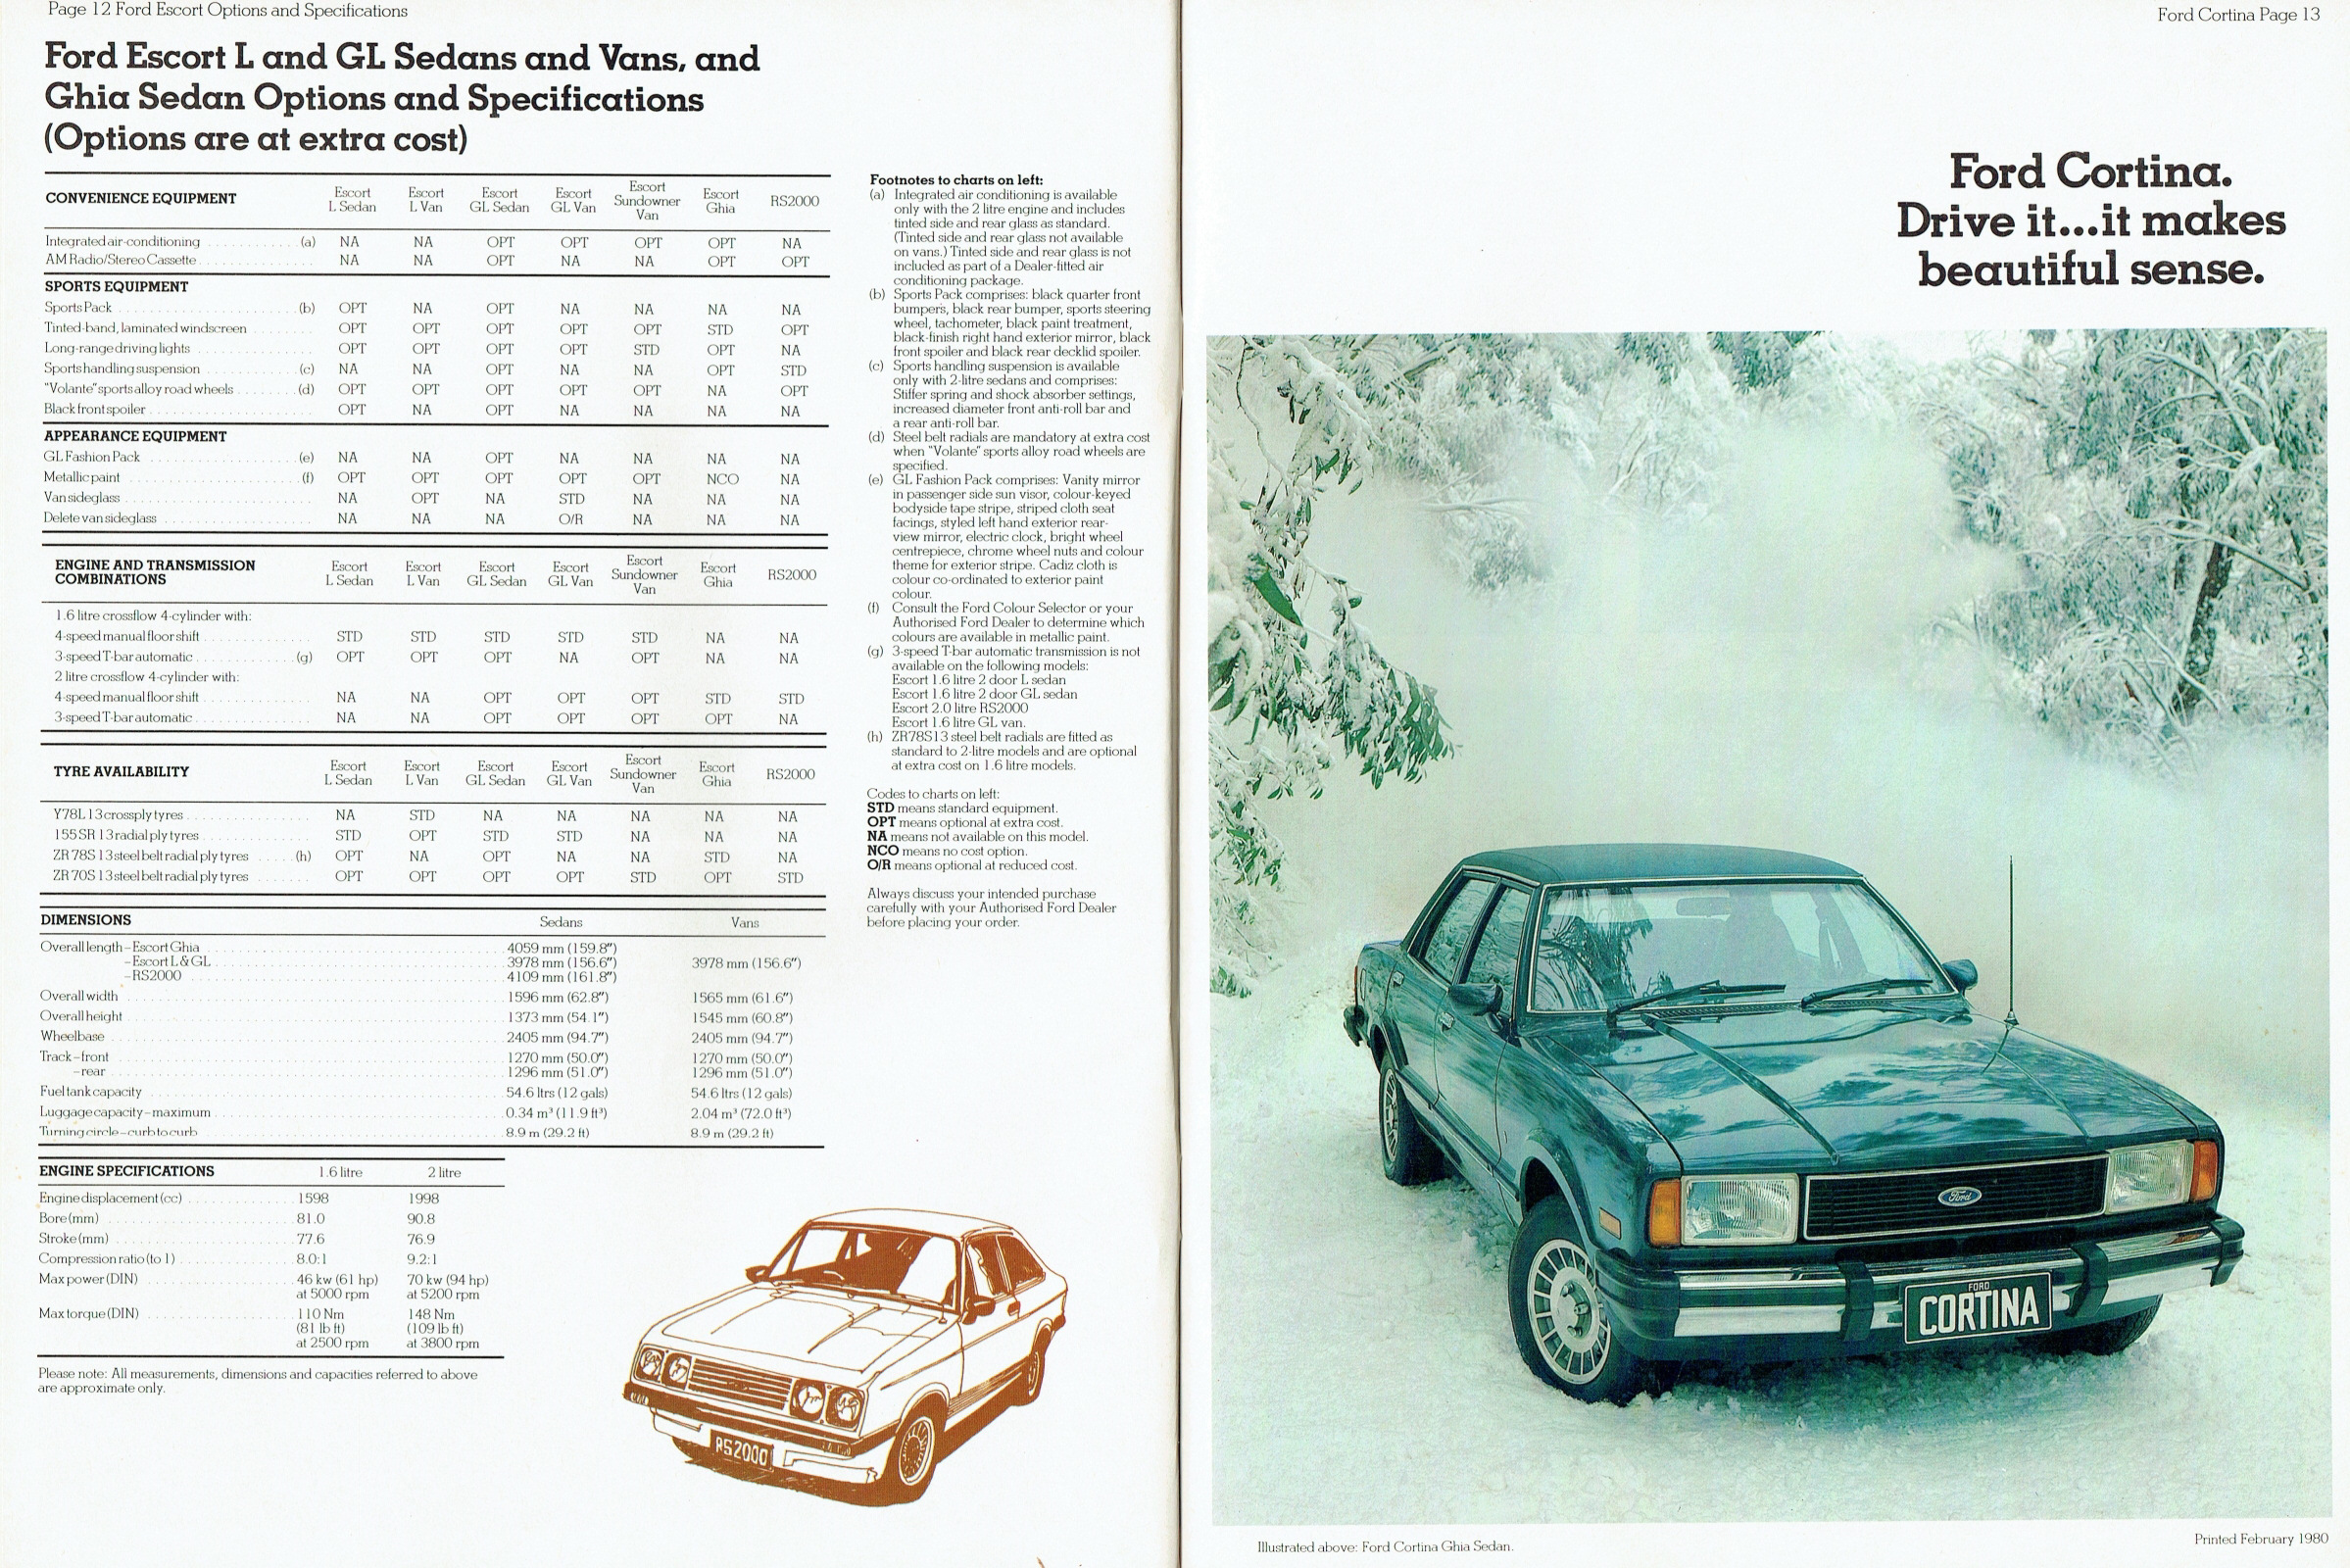 1980_Ford_Cars_Catalogue-12-13